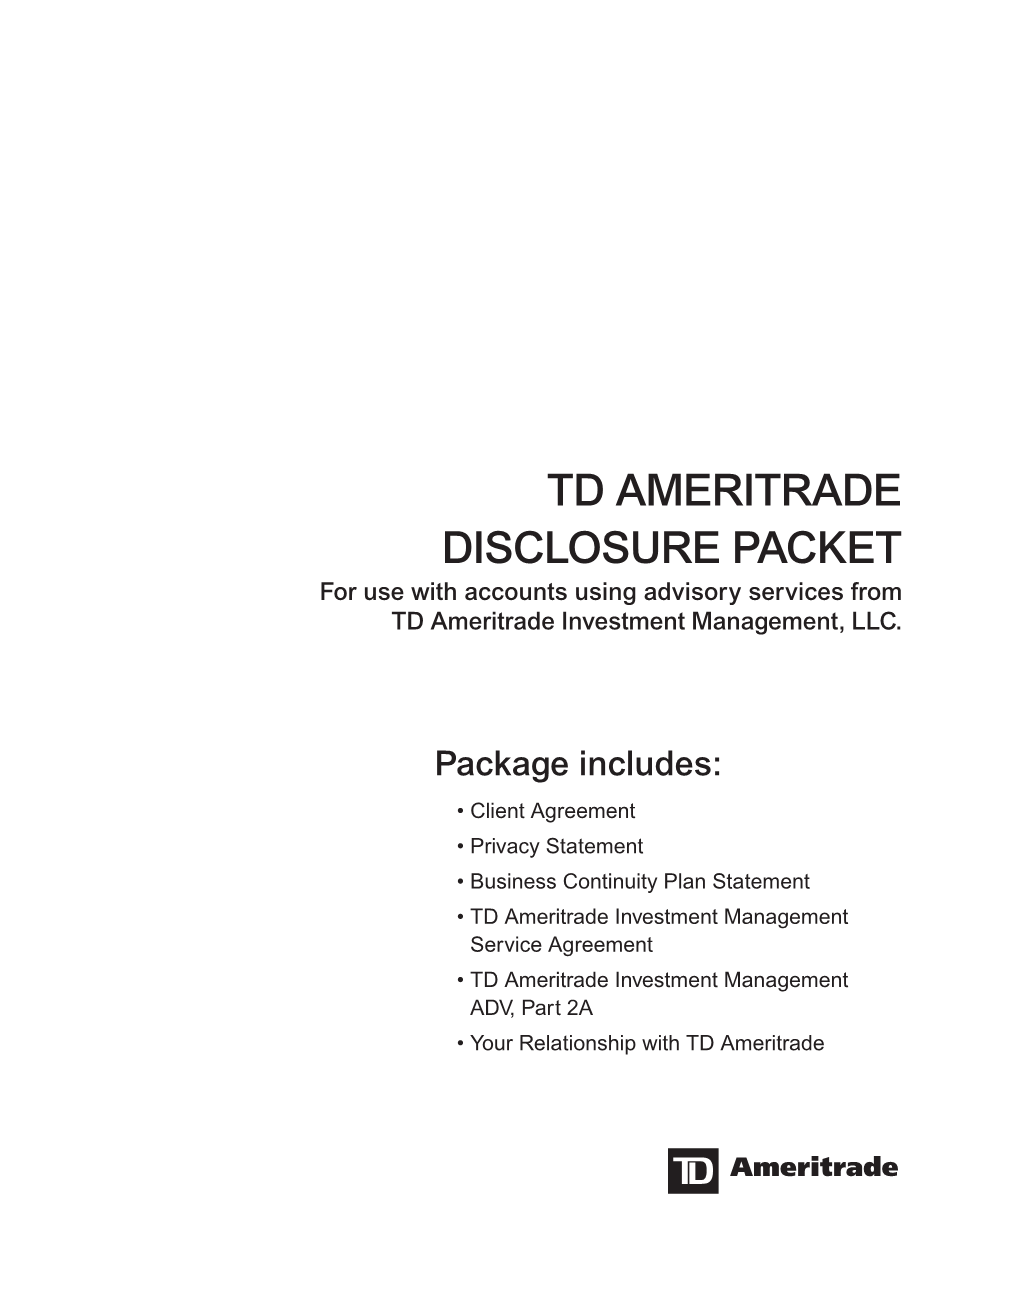 TDAIM Disclosure Packet-TDA 0821